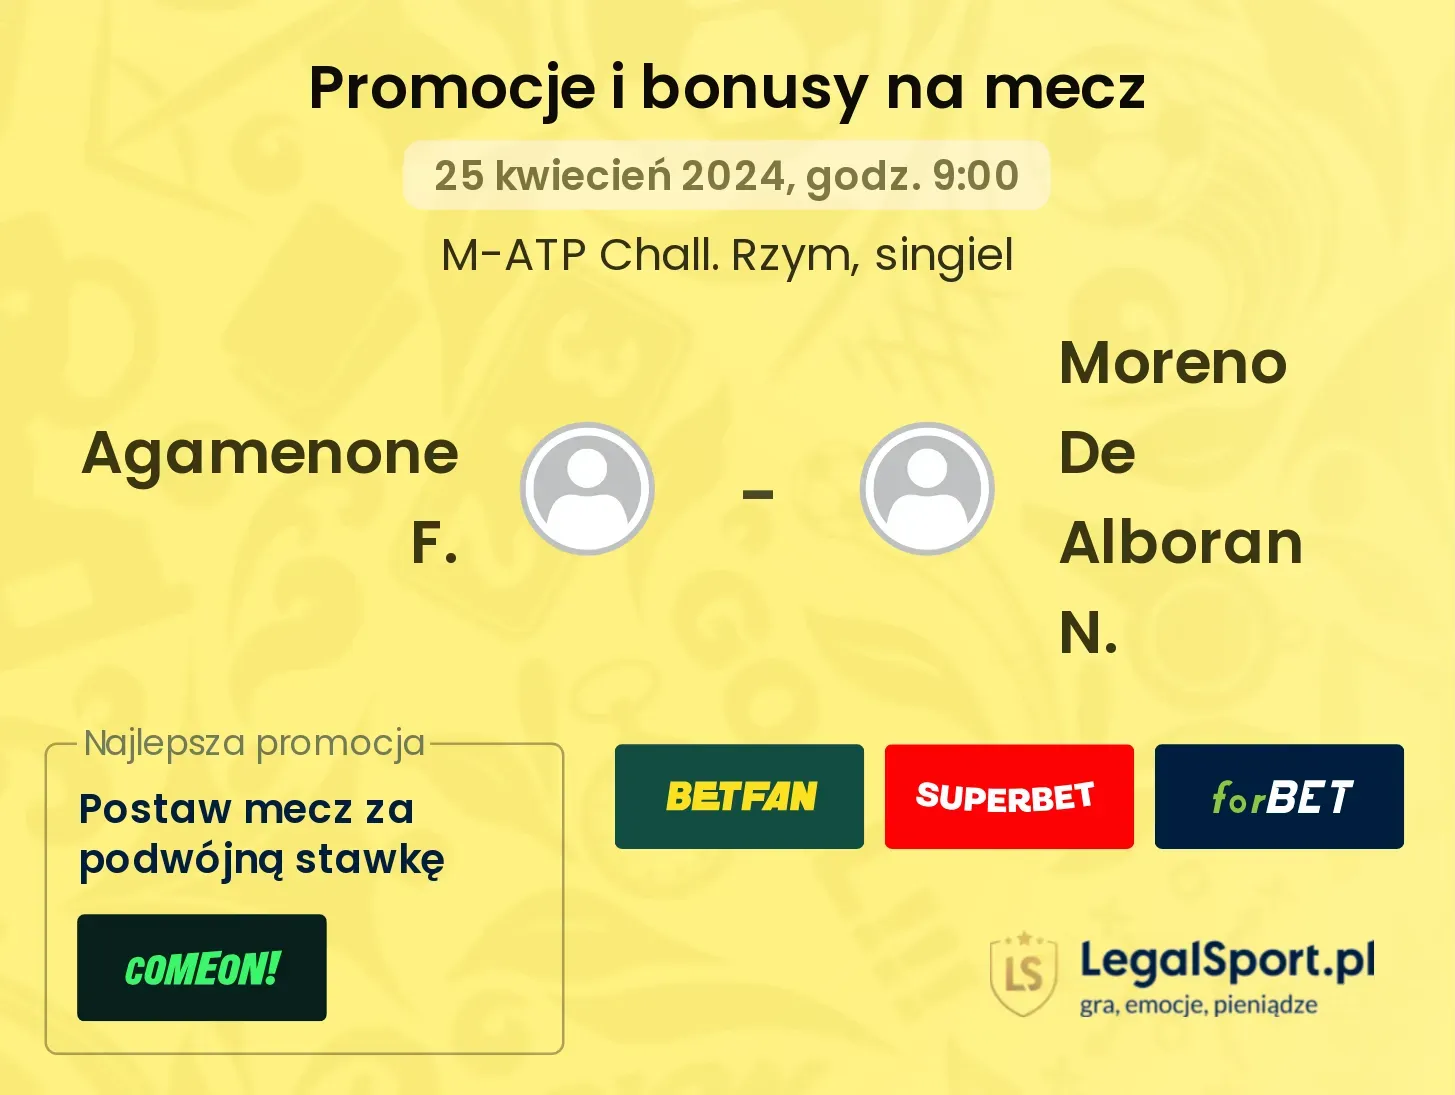 Agamenone F. - Moreno De Alboran N. promocje bonusy na mecz